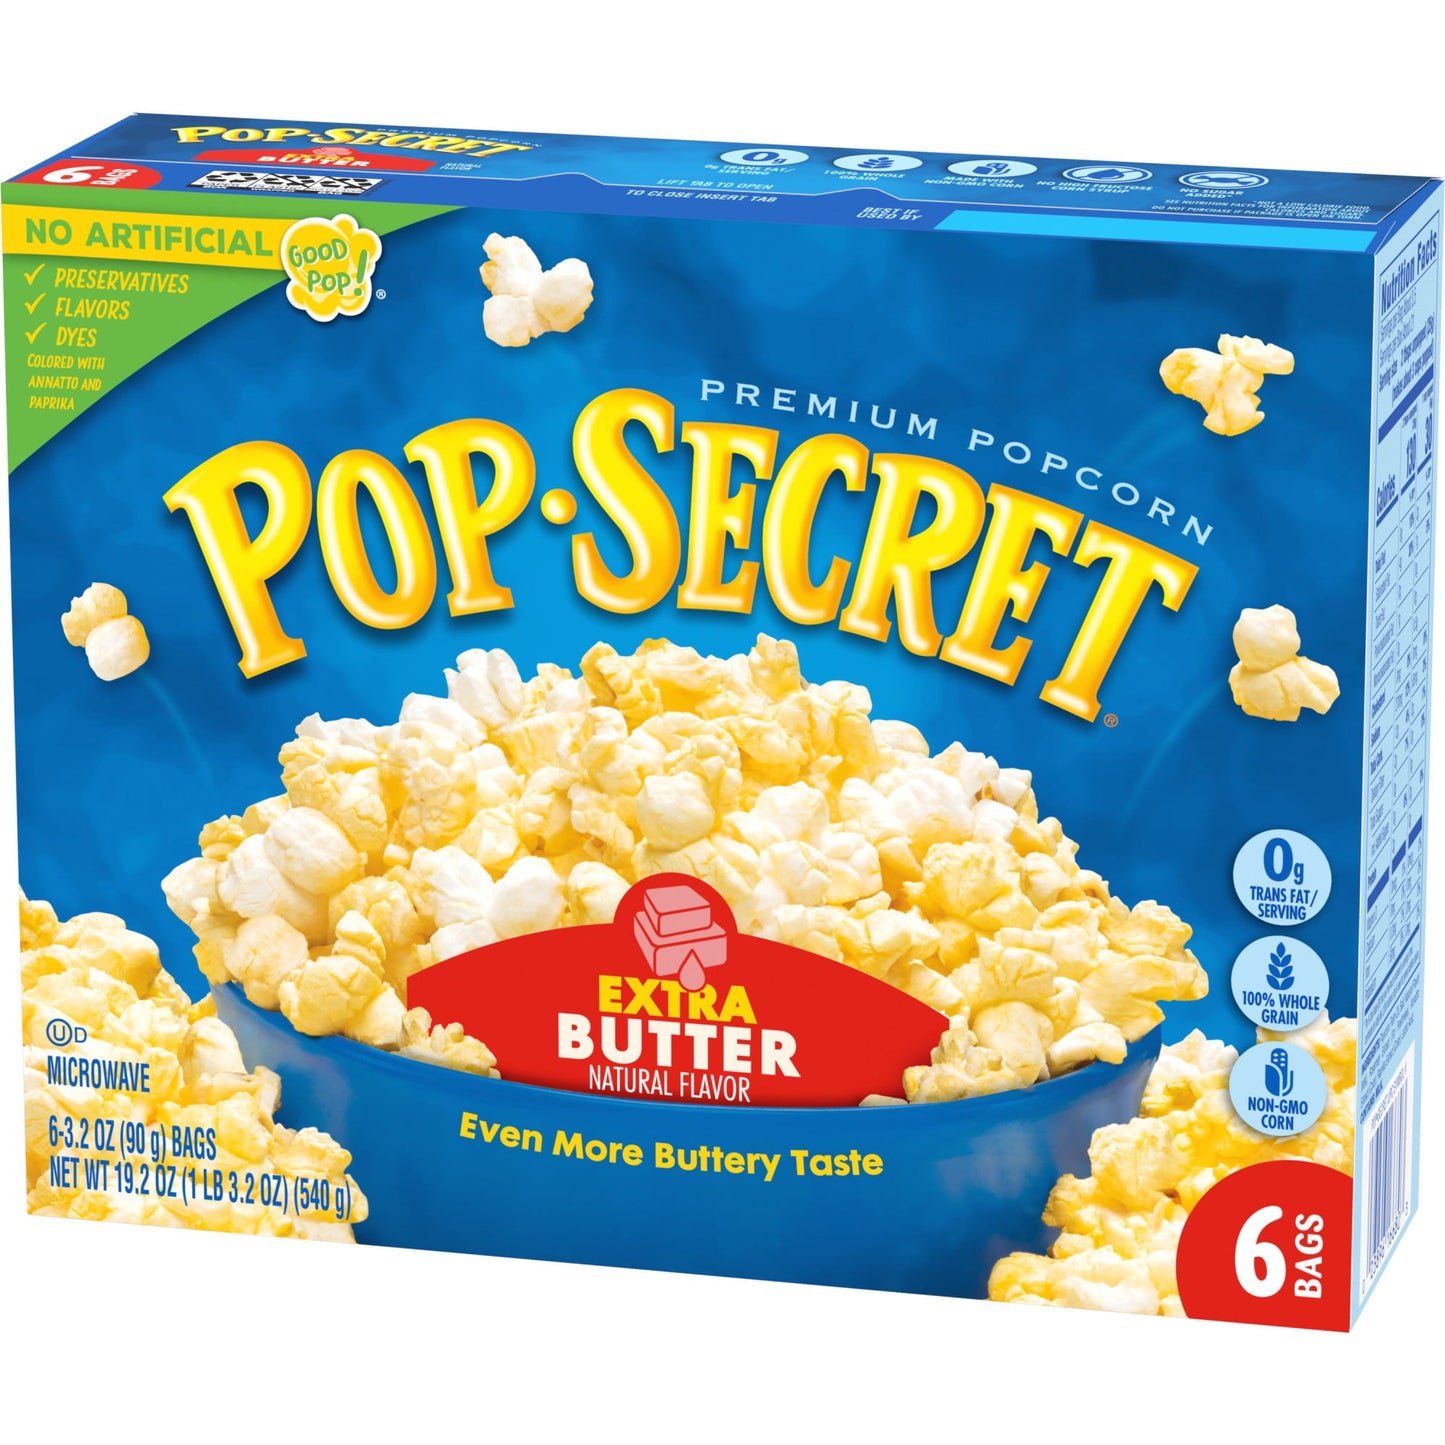 Pop Secret Microwave Popcorn, Extra Butter Flavor, 3.2 oz Sharing Bags, 6 Ct